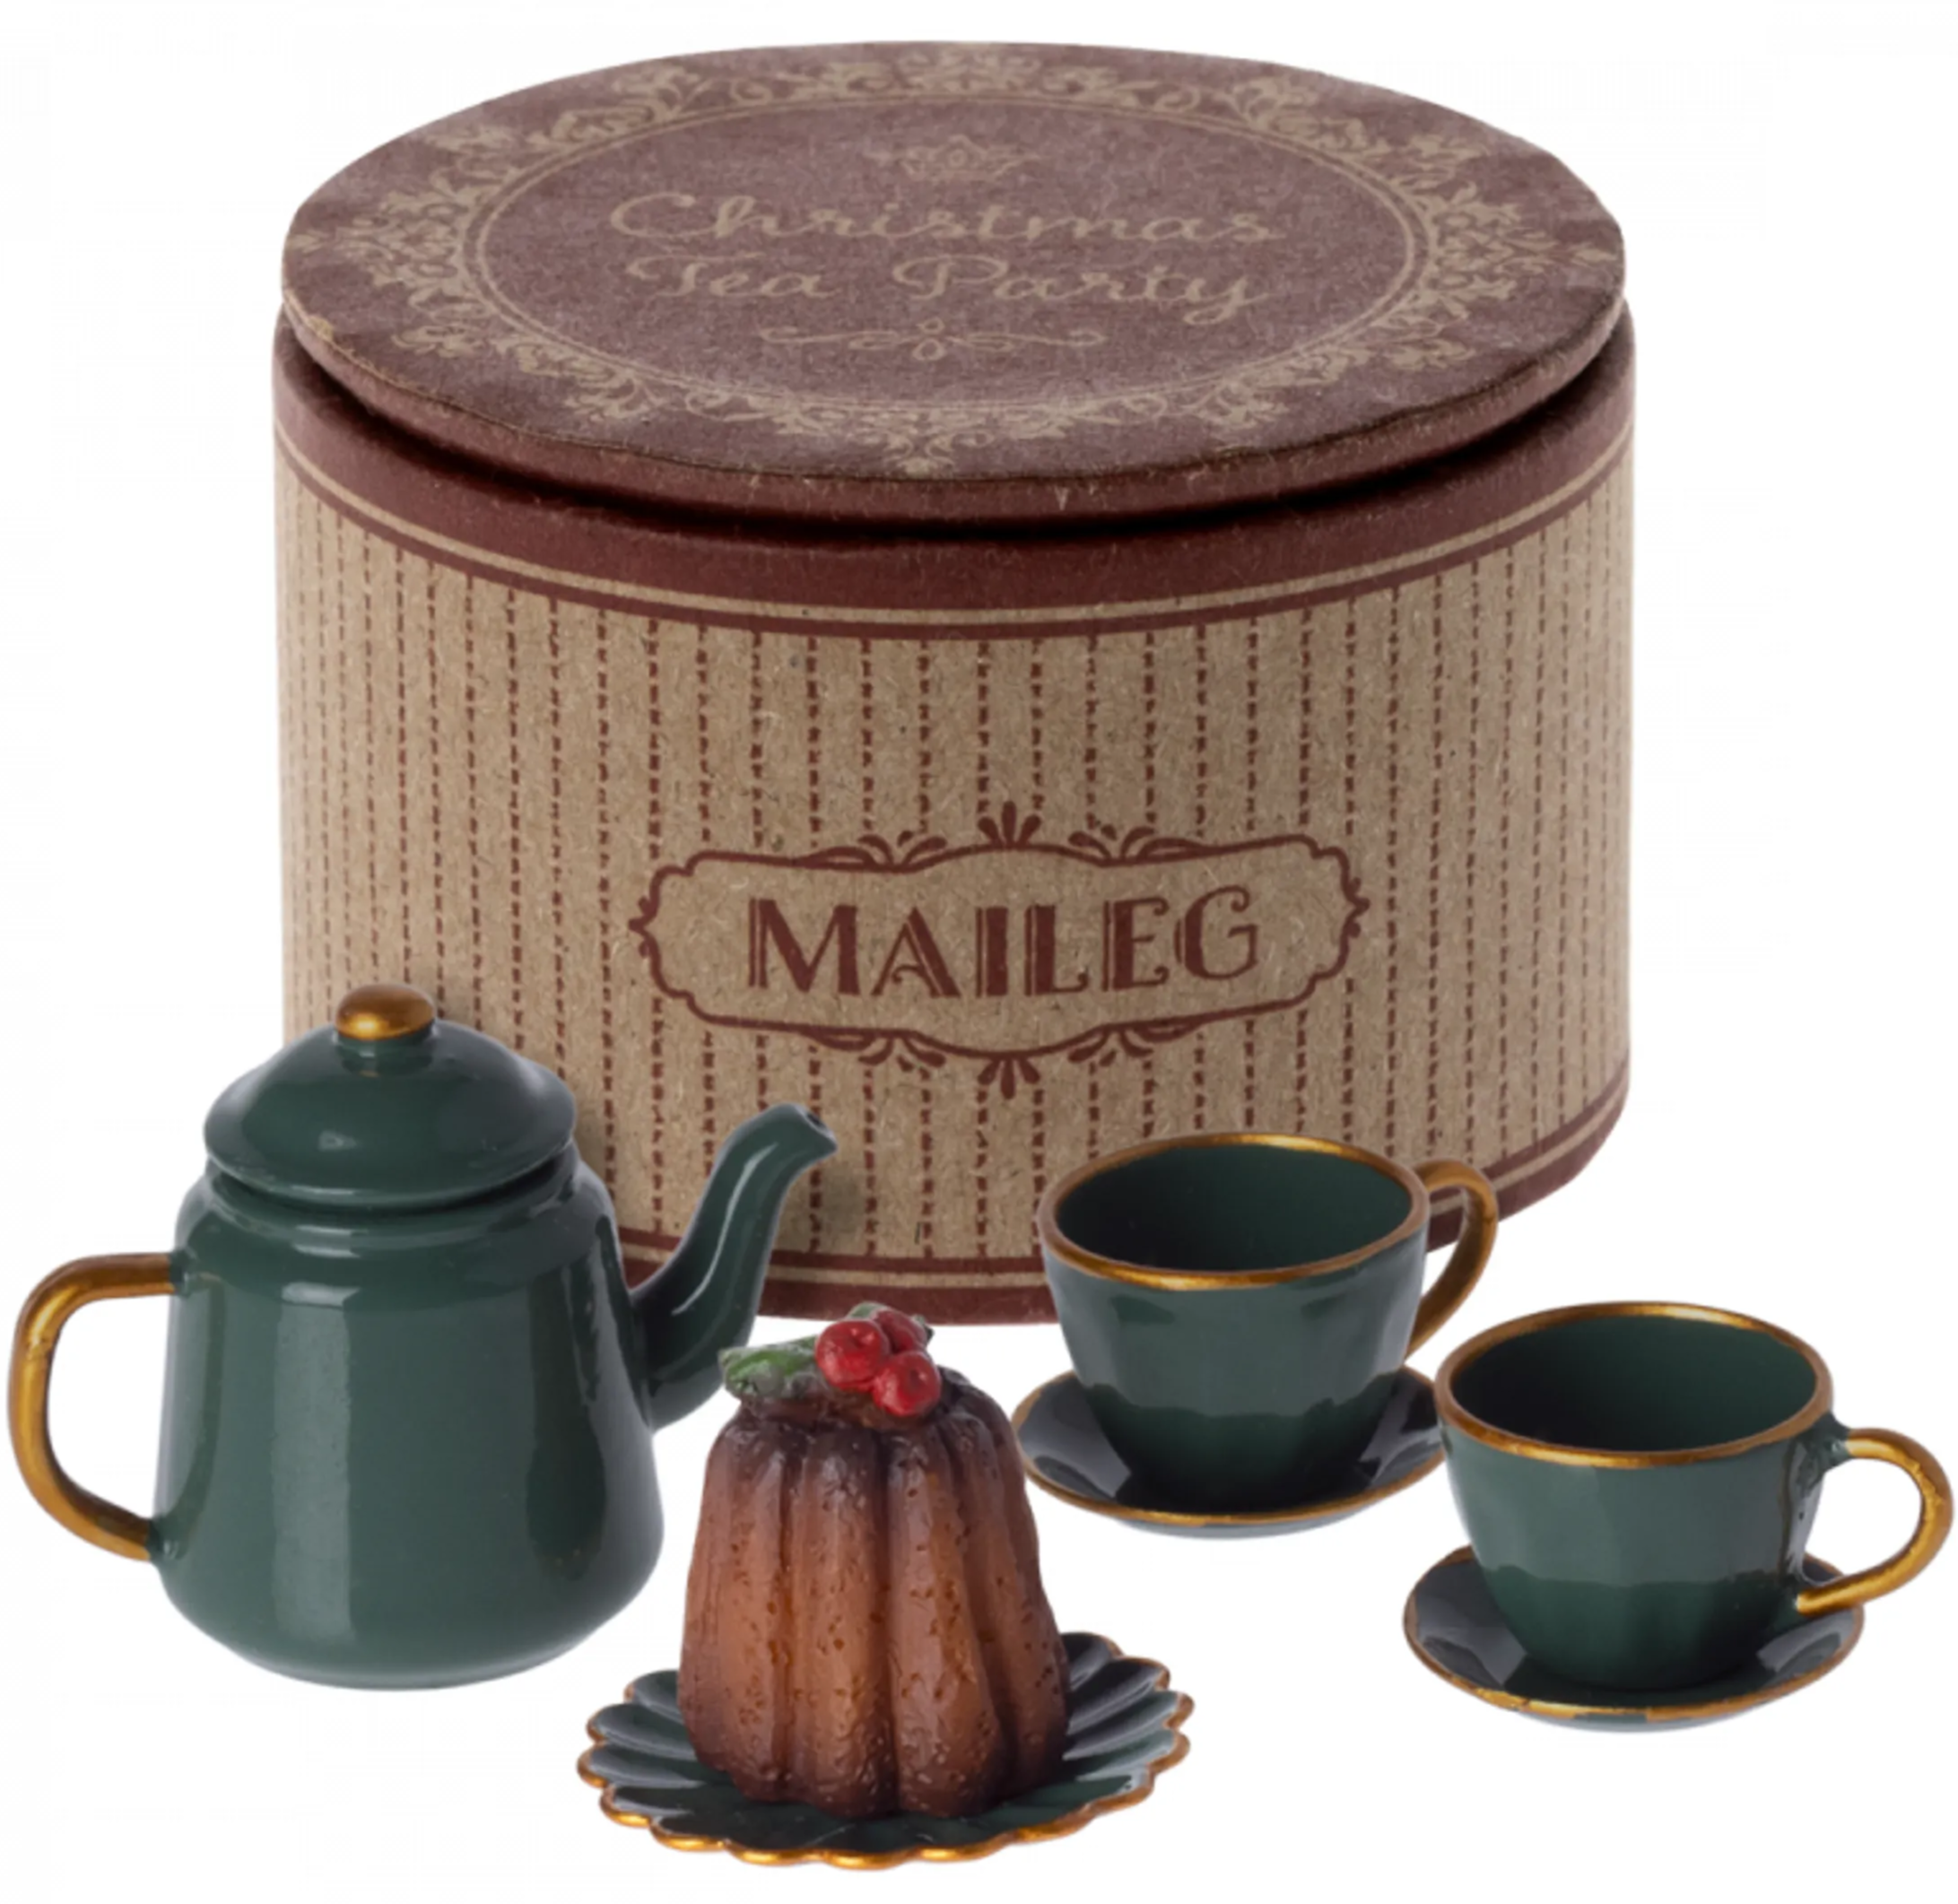 Maileg: Christmas Tea Party tea service